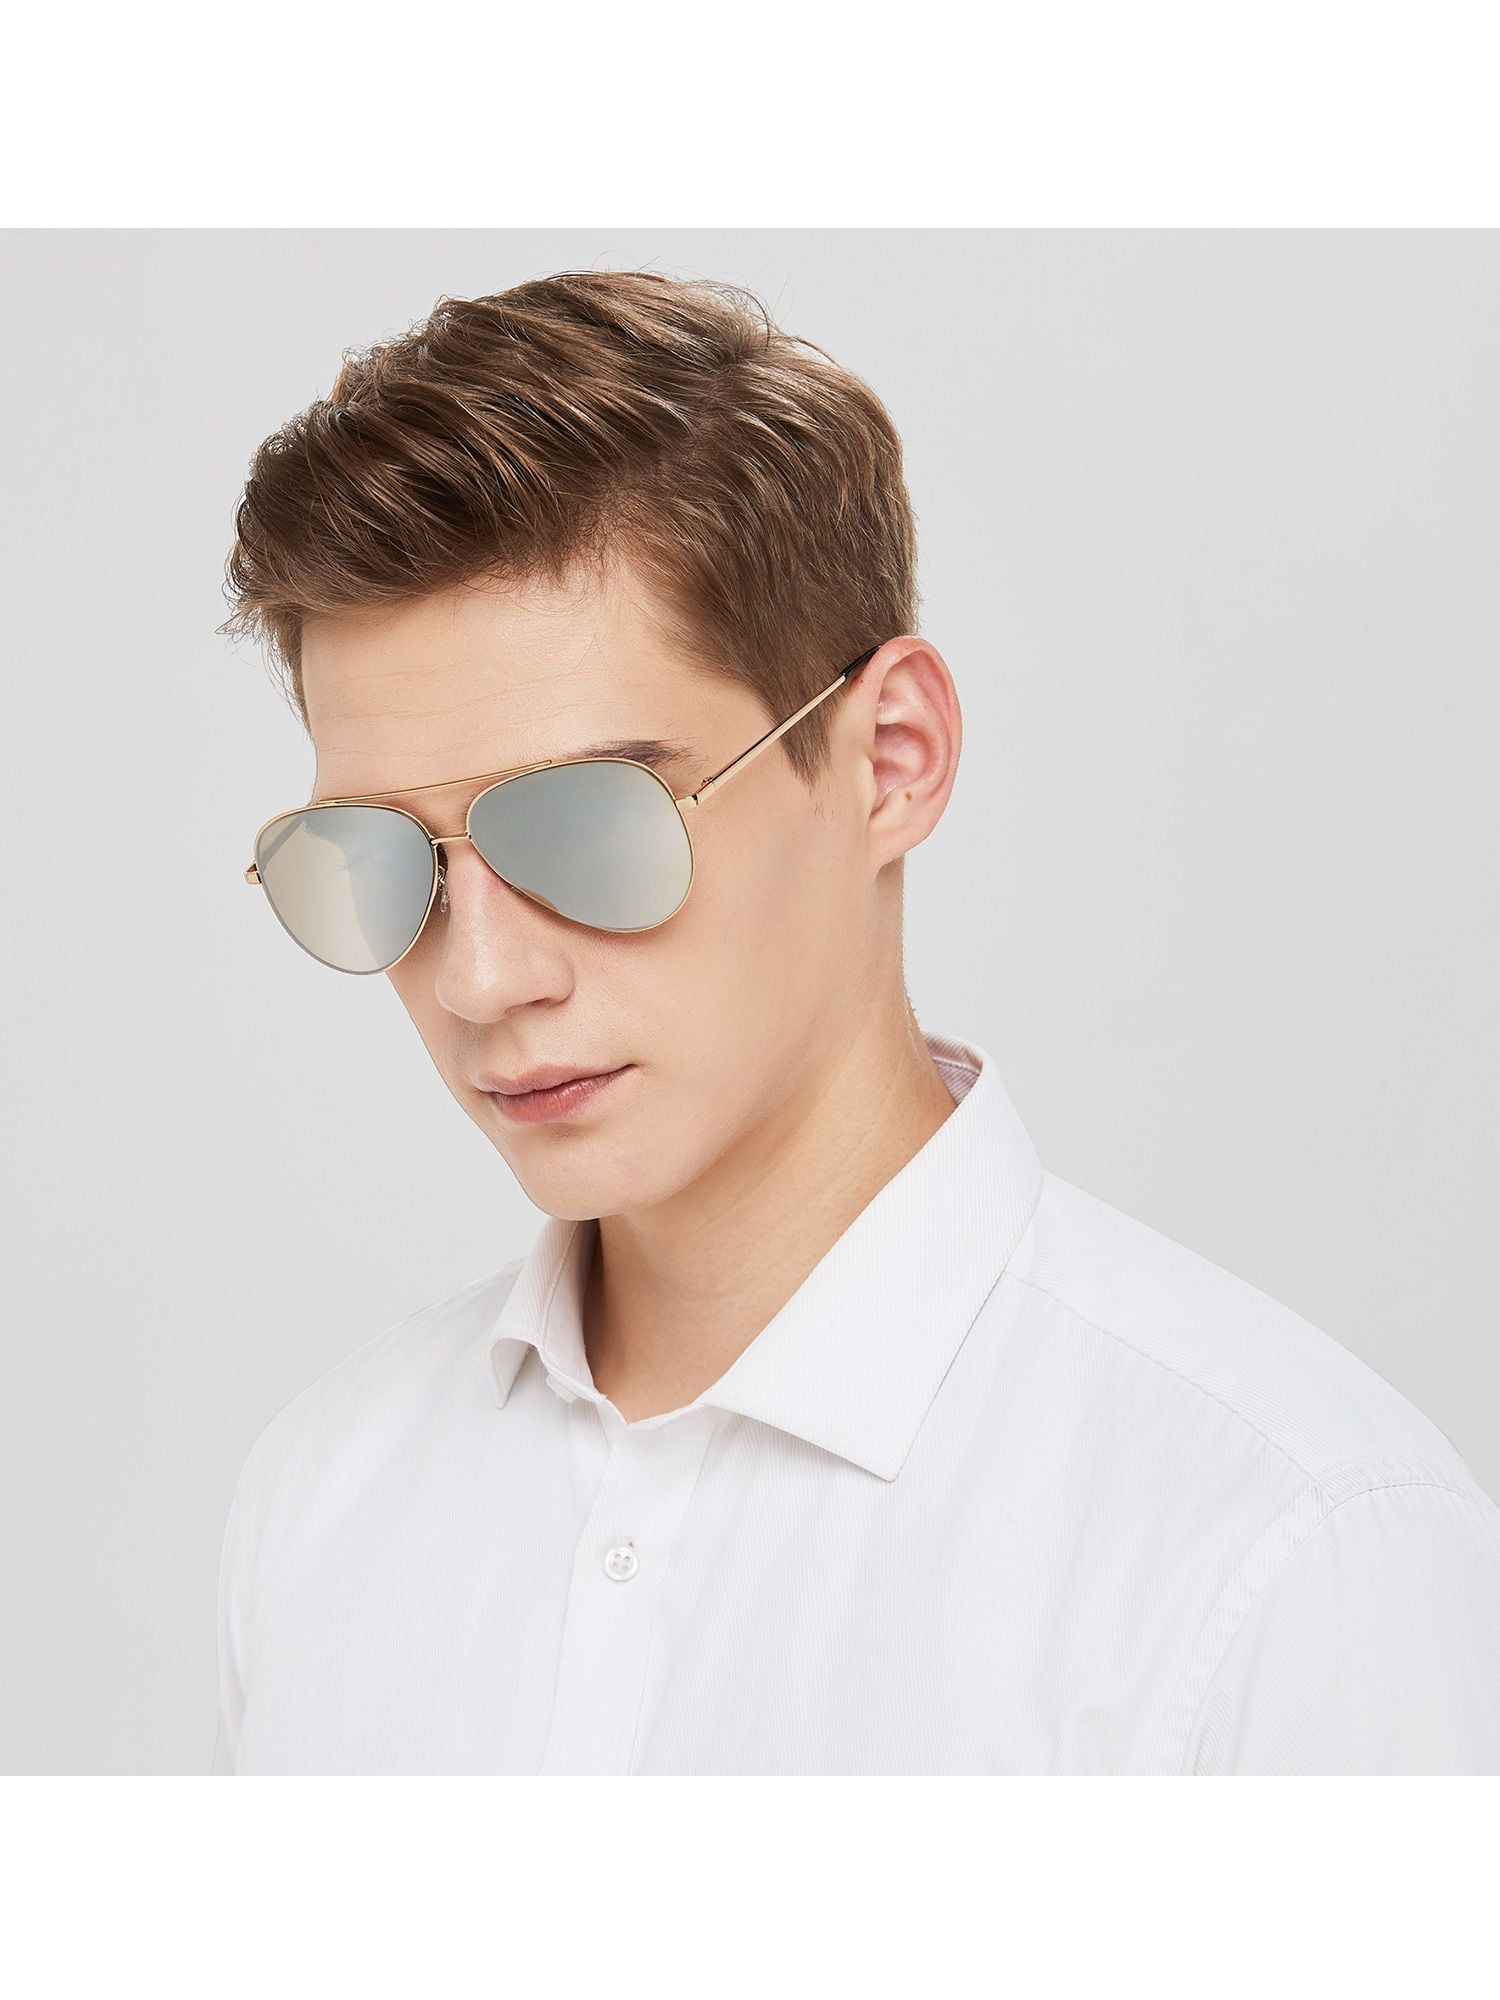 Aviator Sunglasses for Adult Men Male, Flat Brown Mirrored Lens 